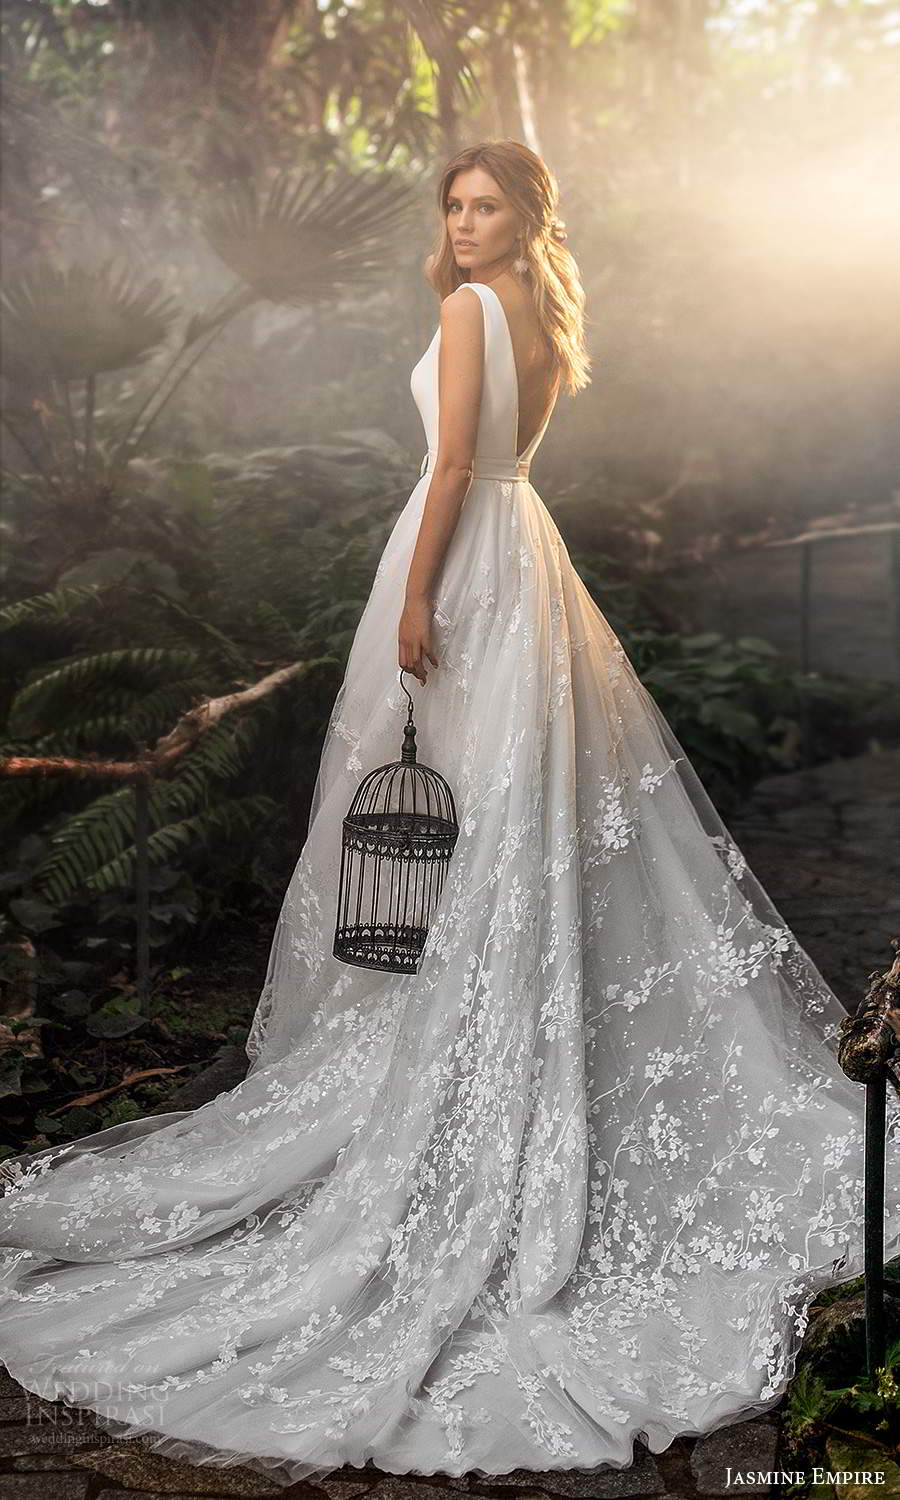 jasmine empire 2021 bridal sleeveless thick straps v neckline clean bodice embellished lace skirt a line ball gown wedding dress chapel train v back (6) bv